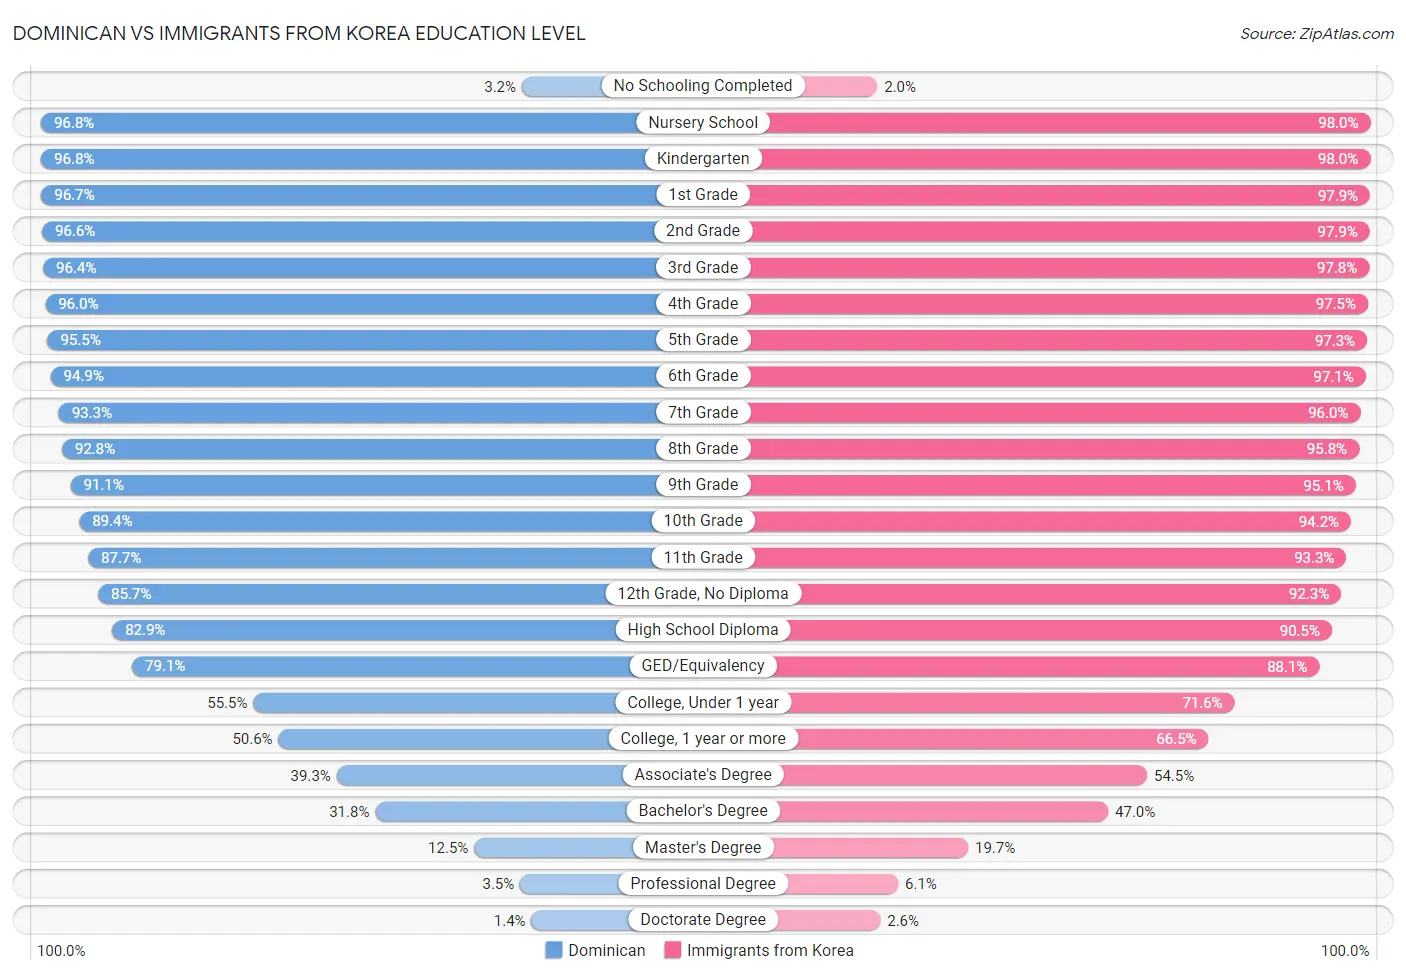 Dominican vs Immigrants from Korea Education Level